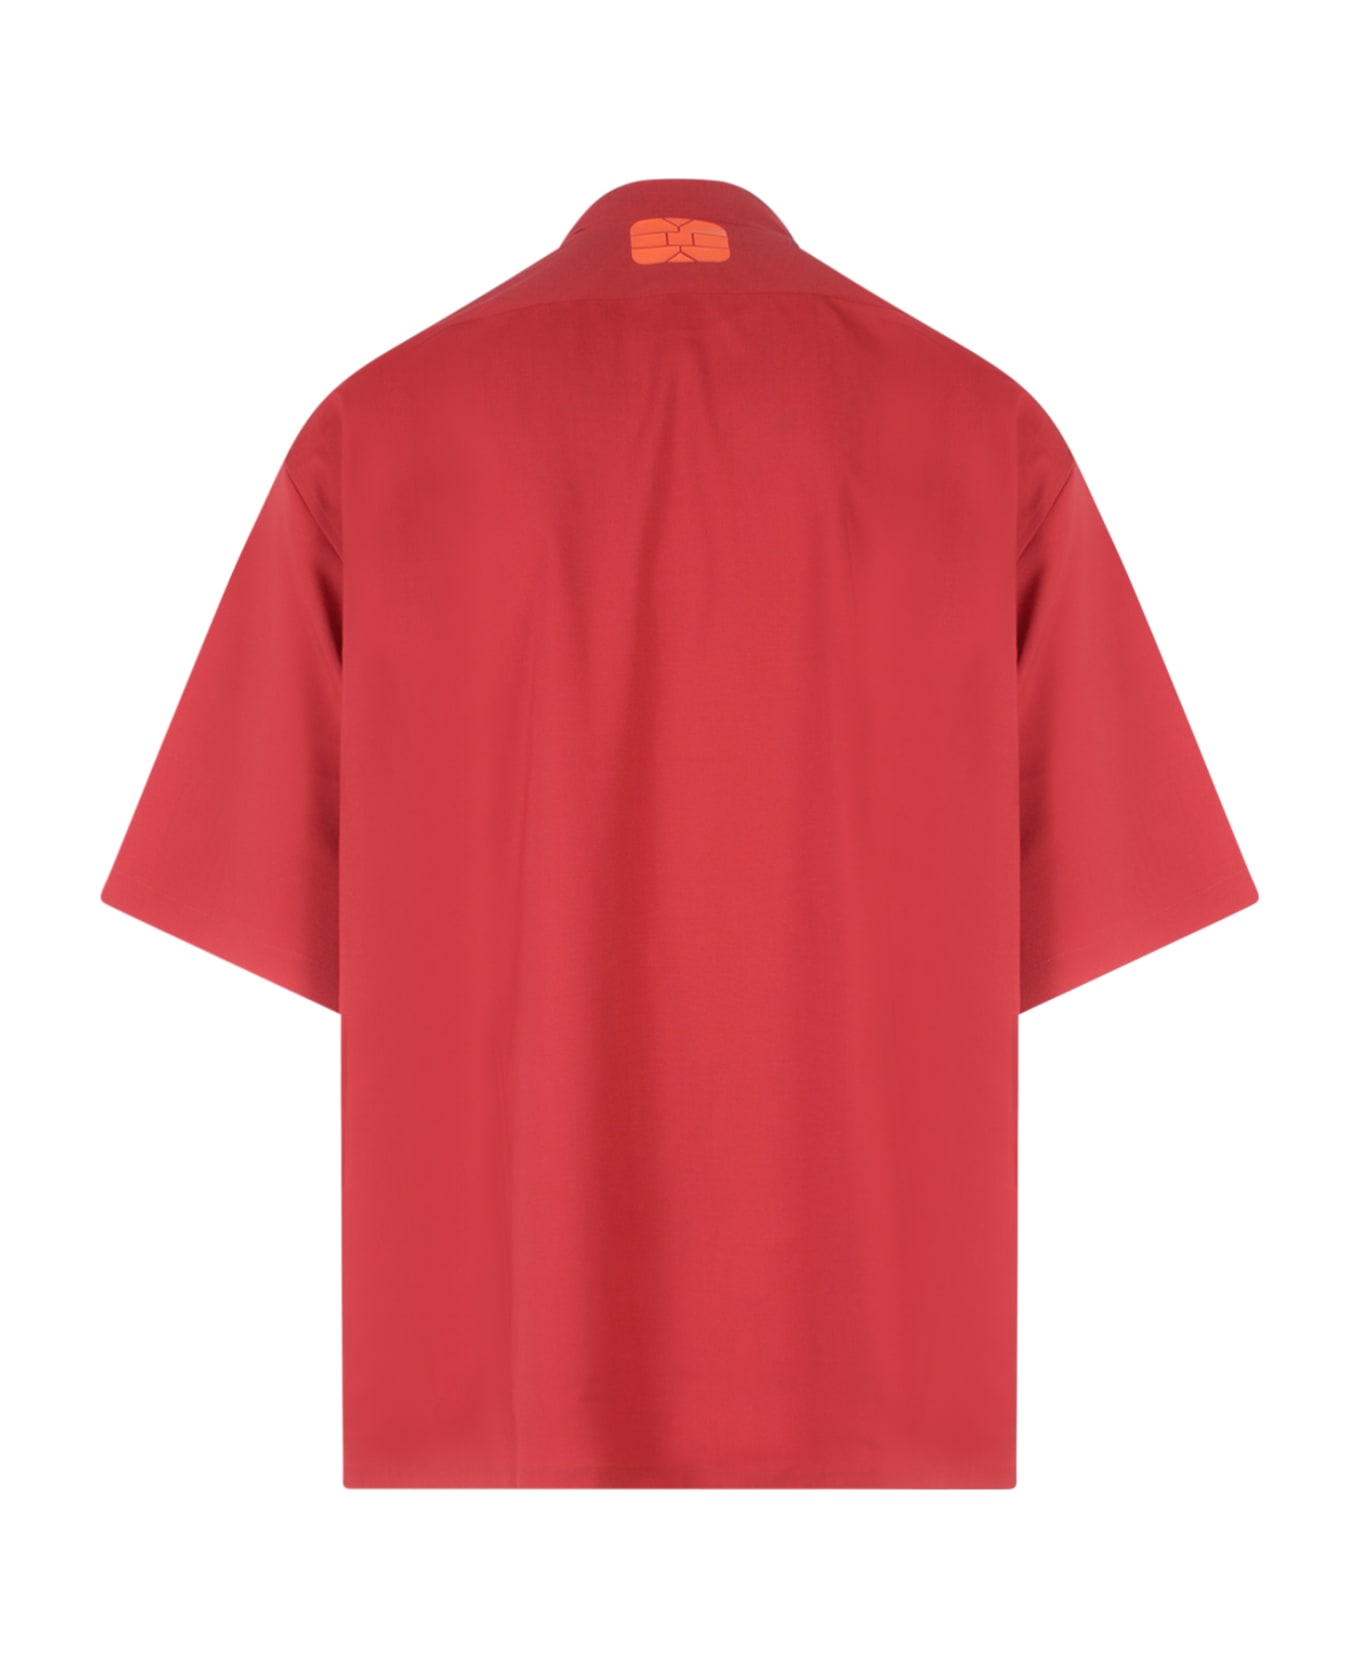 VTMNTS Shirt - Red シャツ